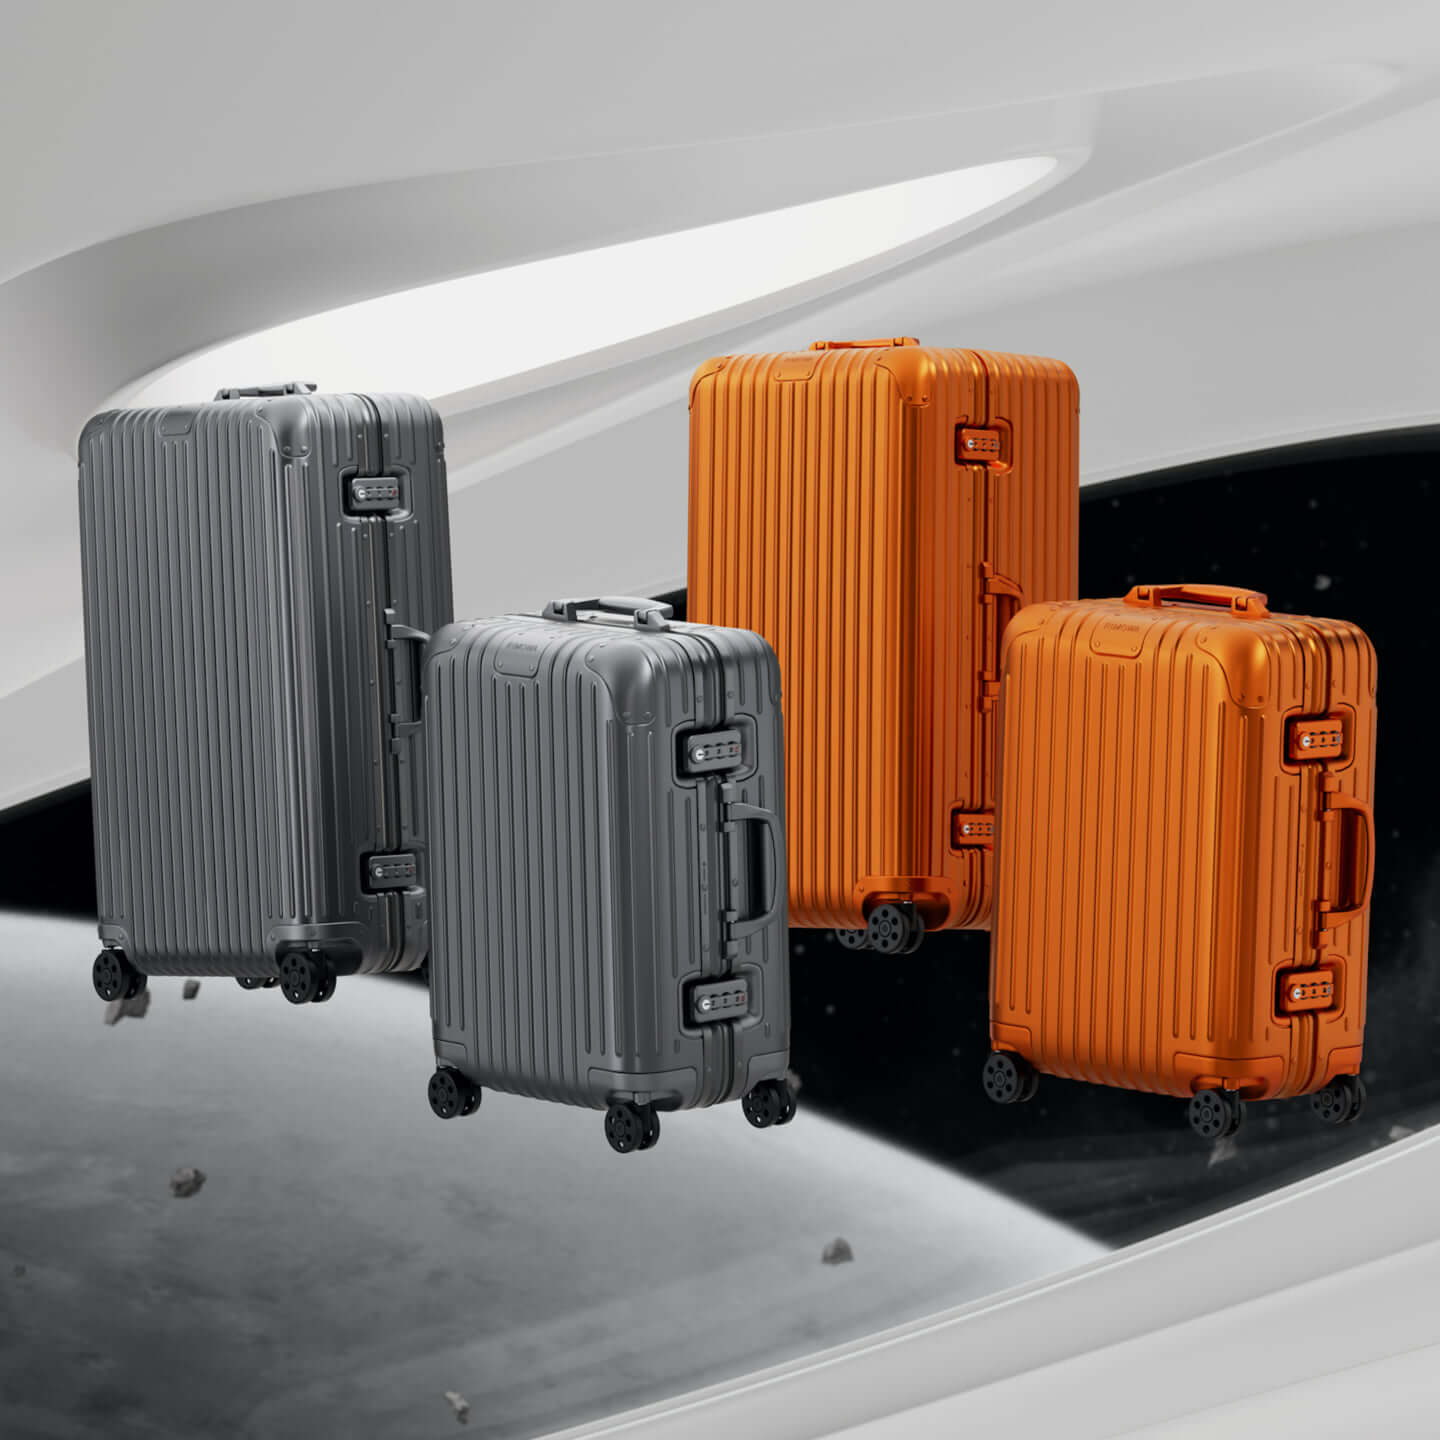 RIMOWAを代表するアルミニウム合金製スーツケースの新色が発売決定！銀河から着想を得たオレンジ、ミディアムグレーが登場 (2021年2月2日) -  エキサイトニュース